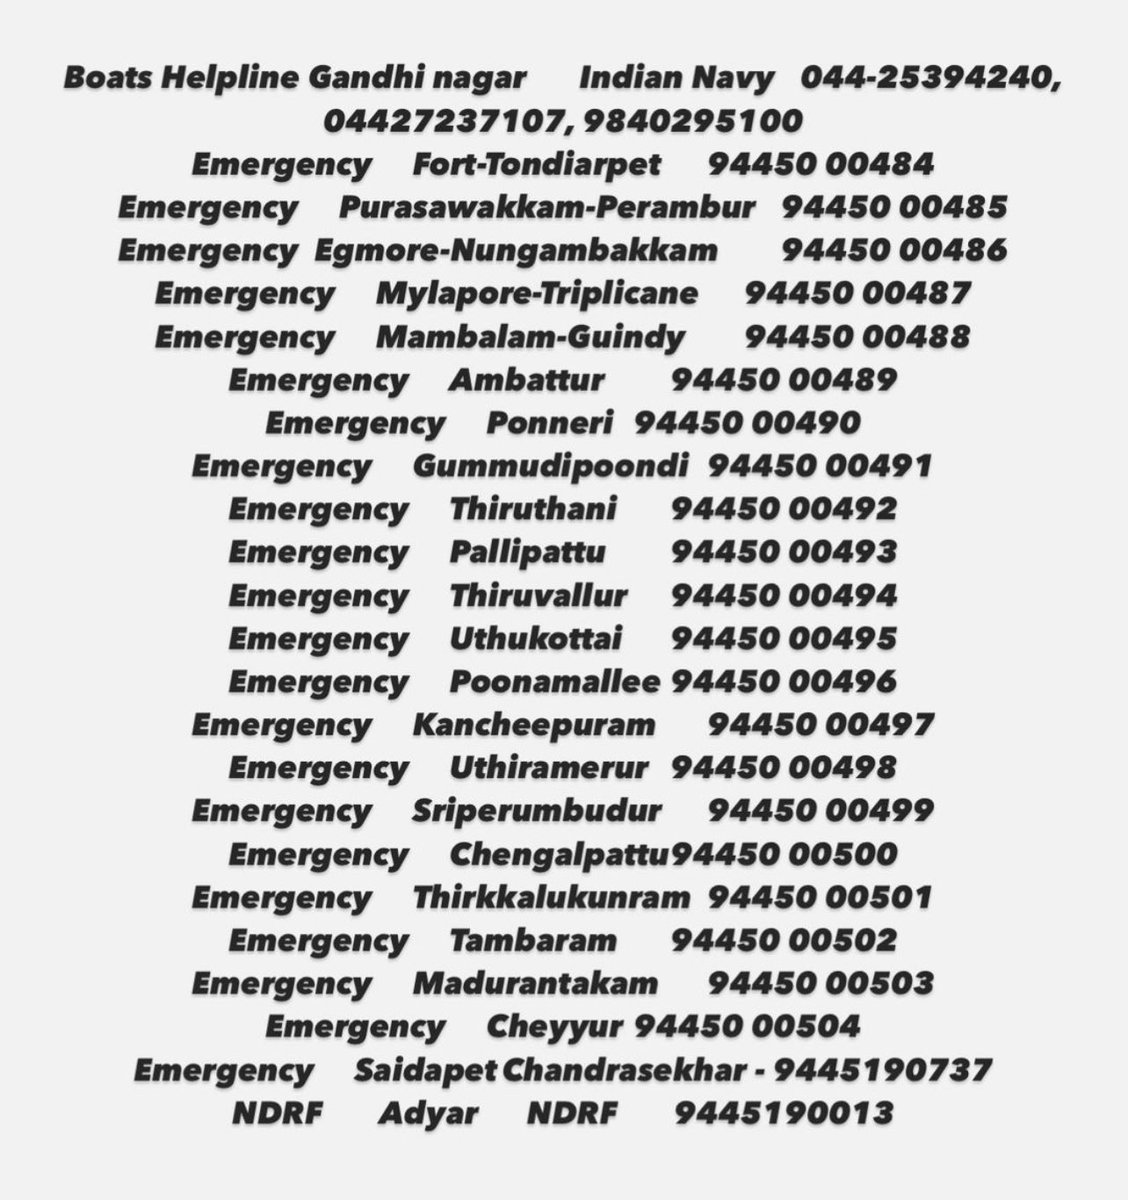 Please forward 🙏🏽

@Hereprak @itzcrazykichu @dishyasharma @DThiravidamani 

#ChennaiFloods #ChennaiHelps #Chennai #CycloneMichuang